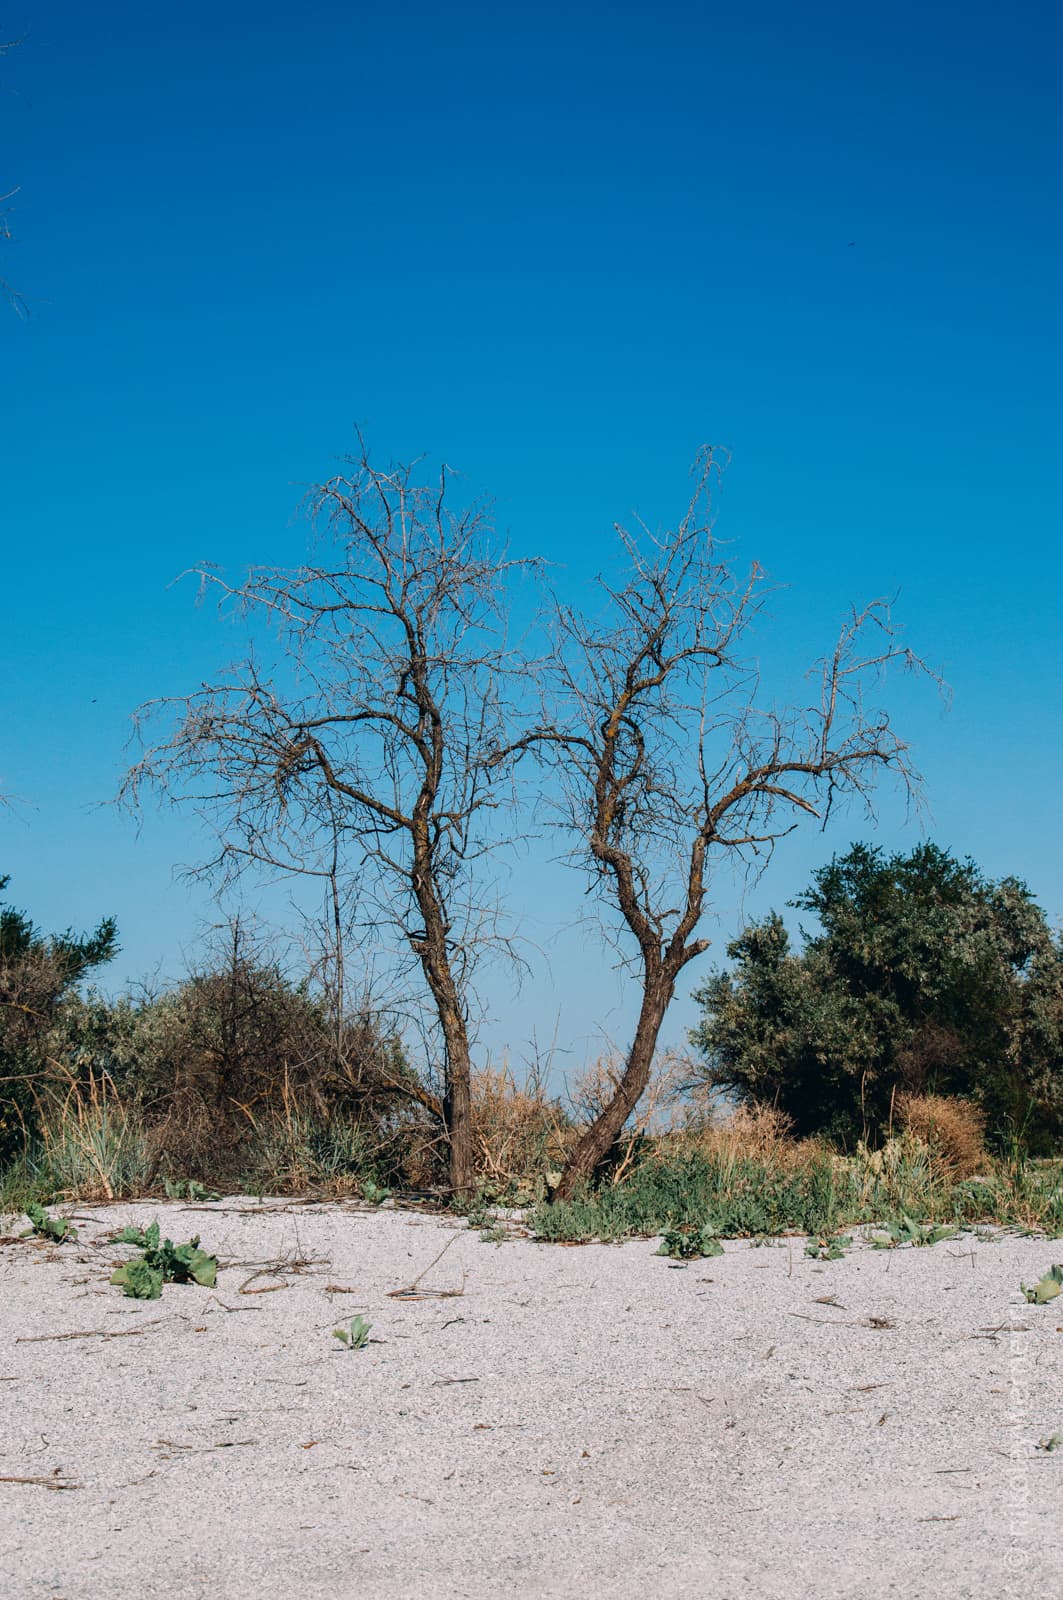 Песок, трава да кустарники за ним, и сухое дерево на фоне синего неба